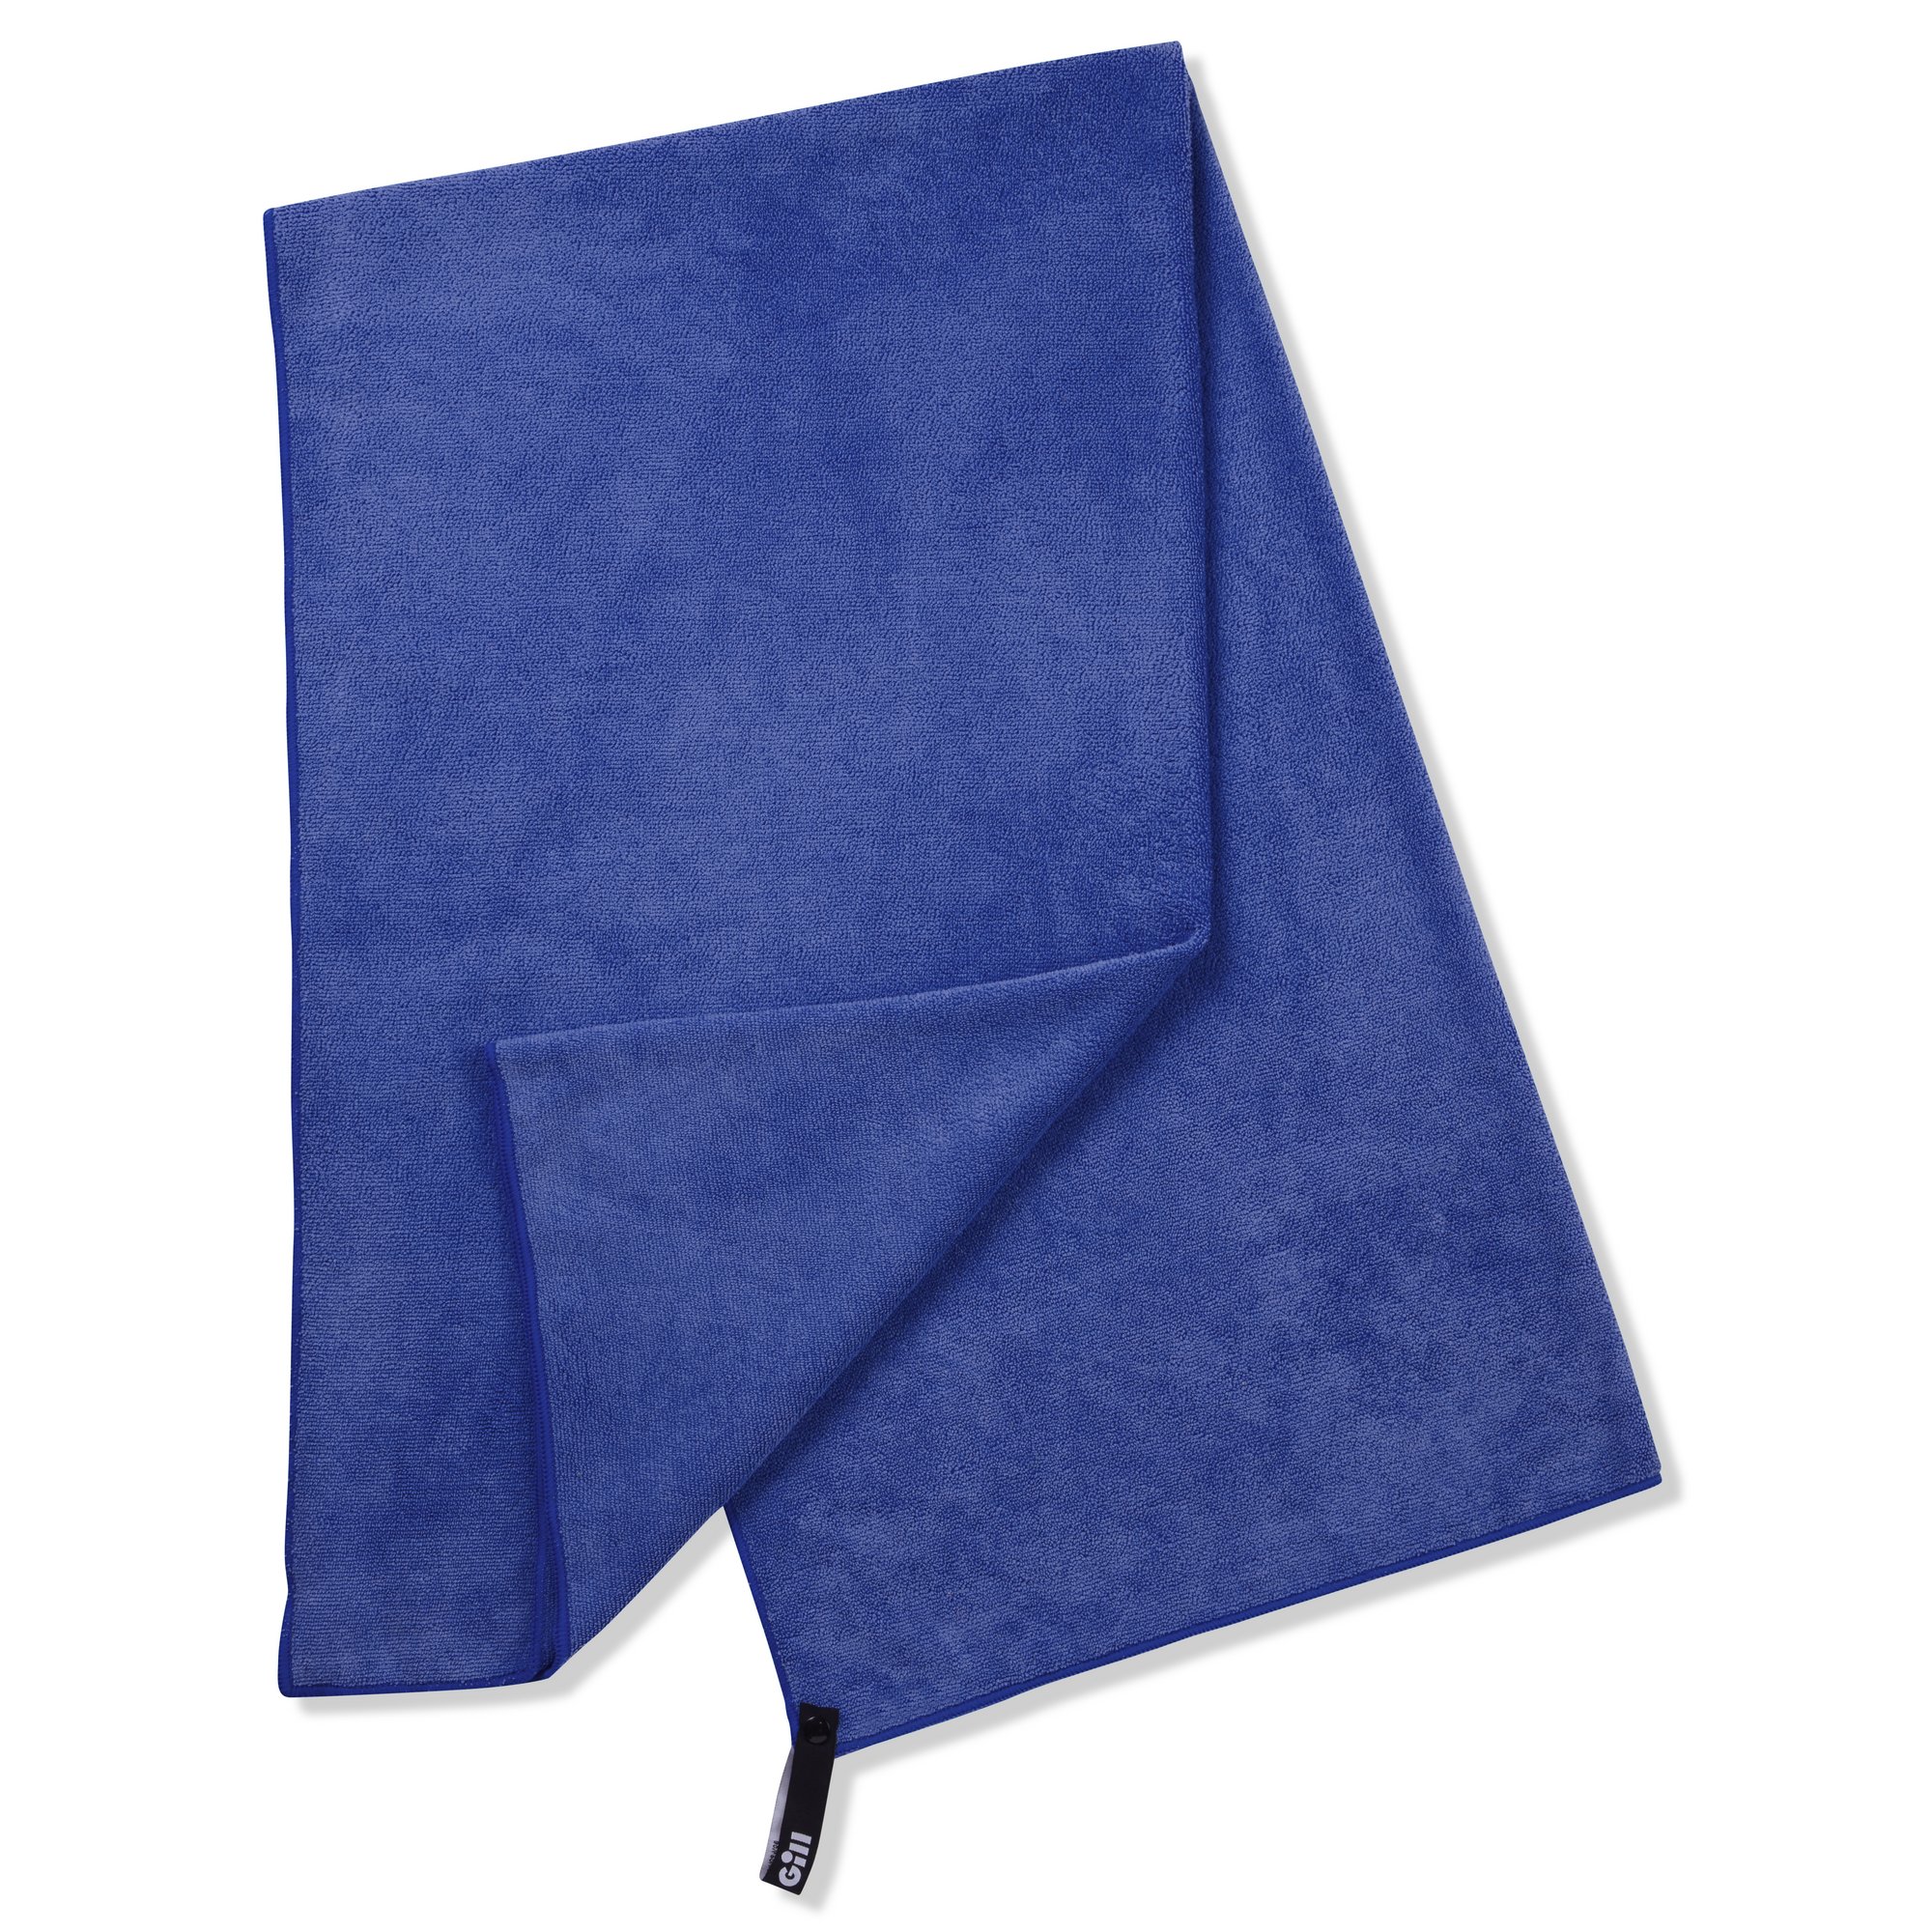 Vert séchage serviette - Bamboe sèche - serviettes - Tissu en microfibre -  tissu de